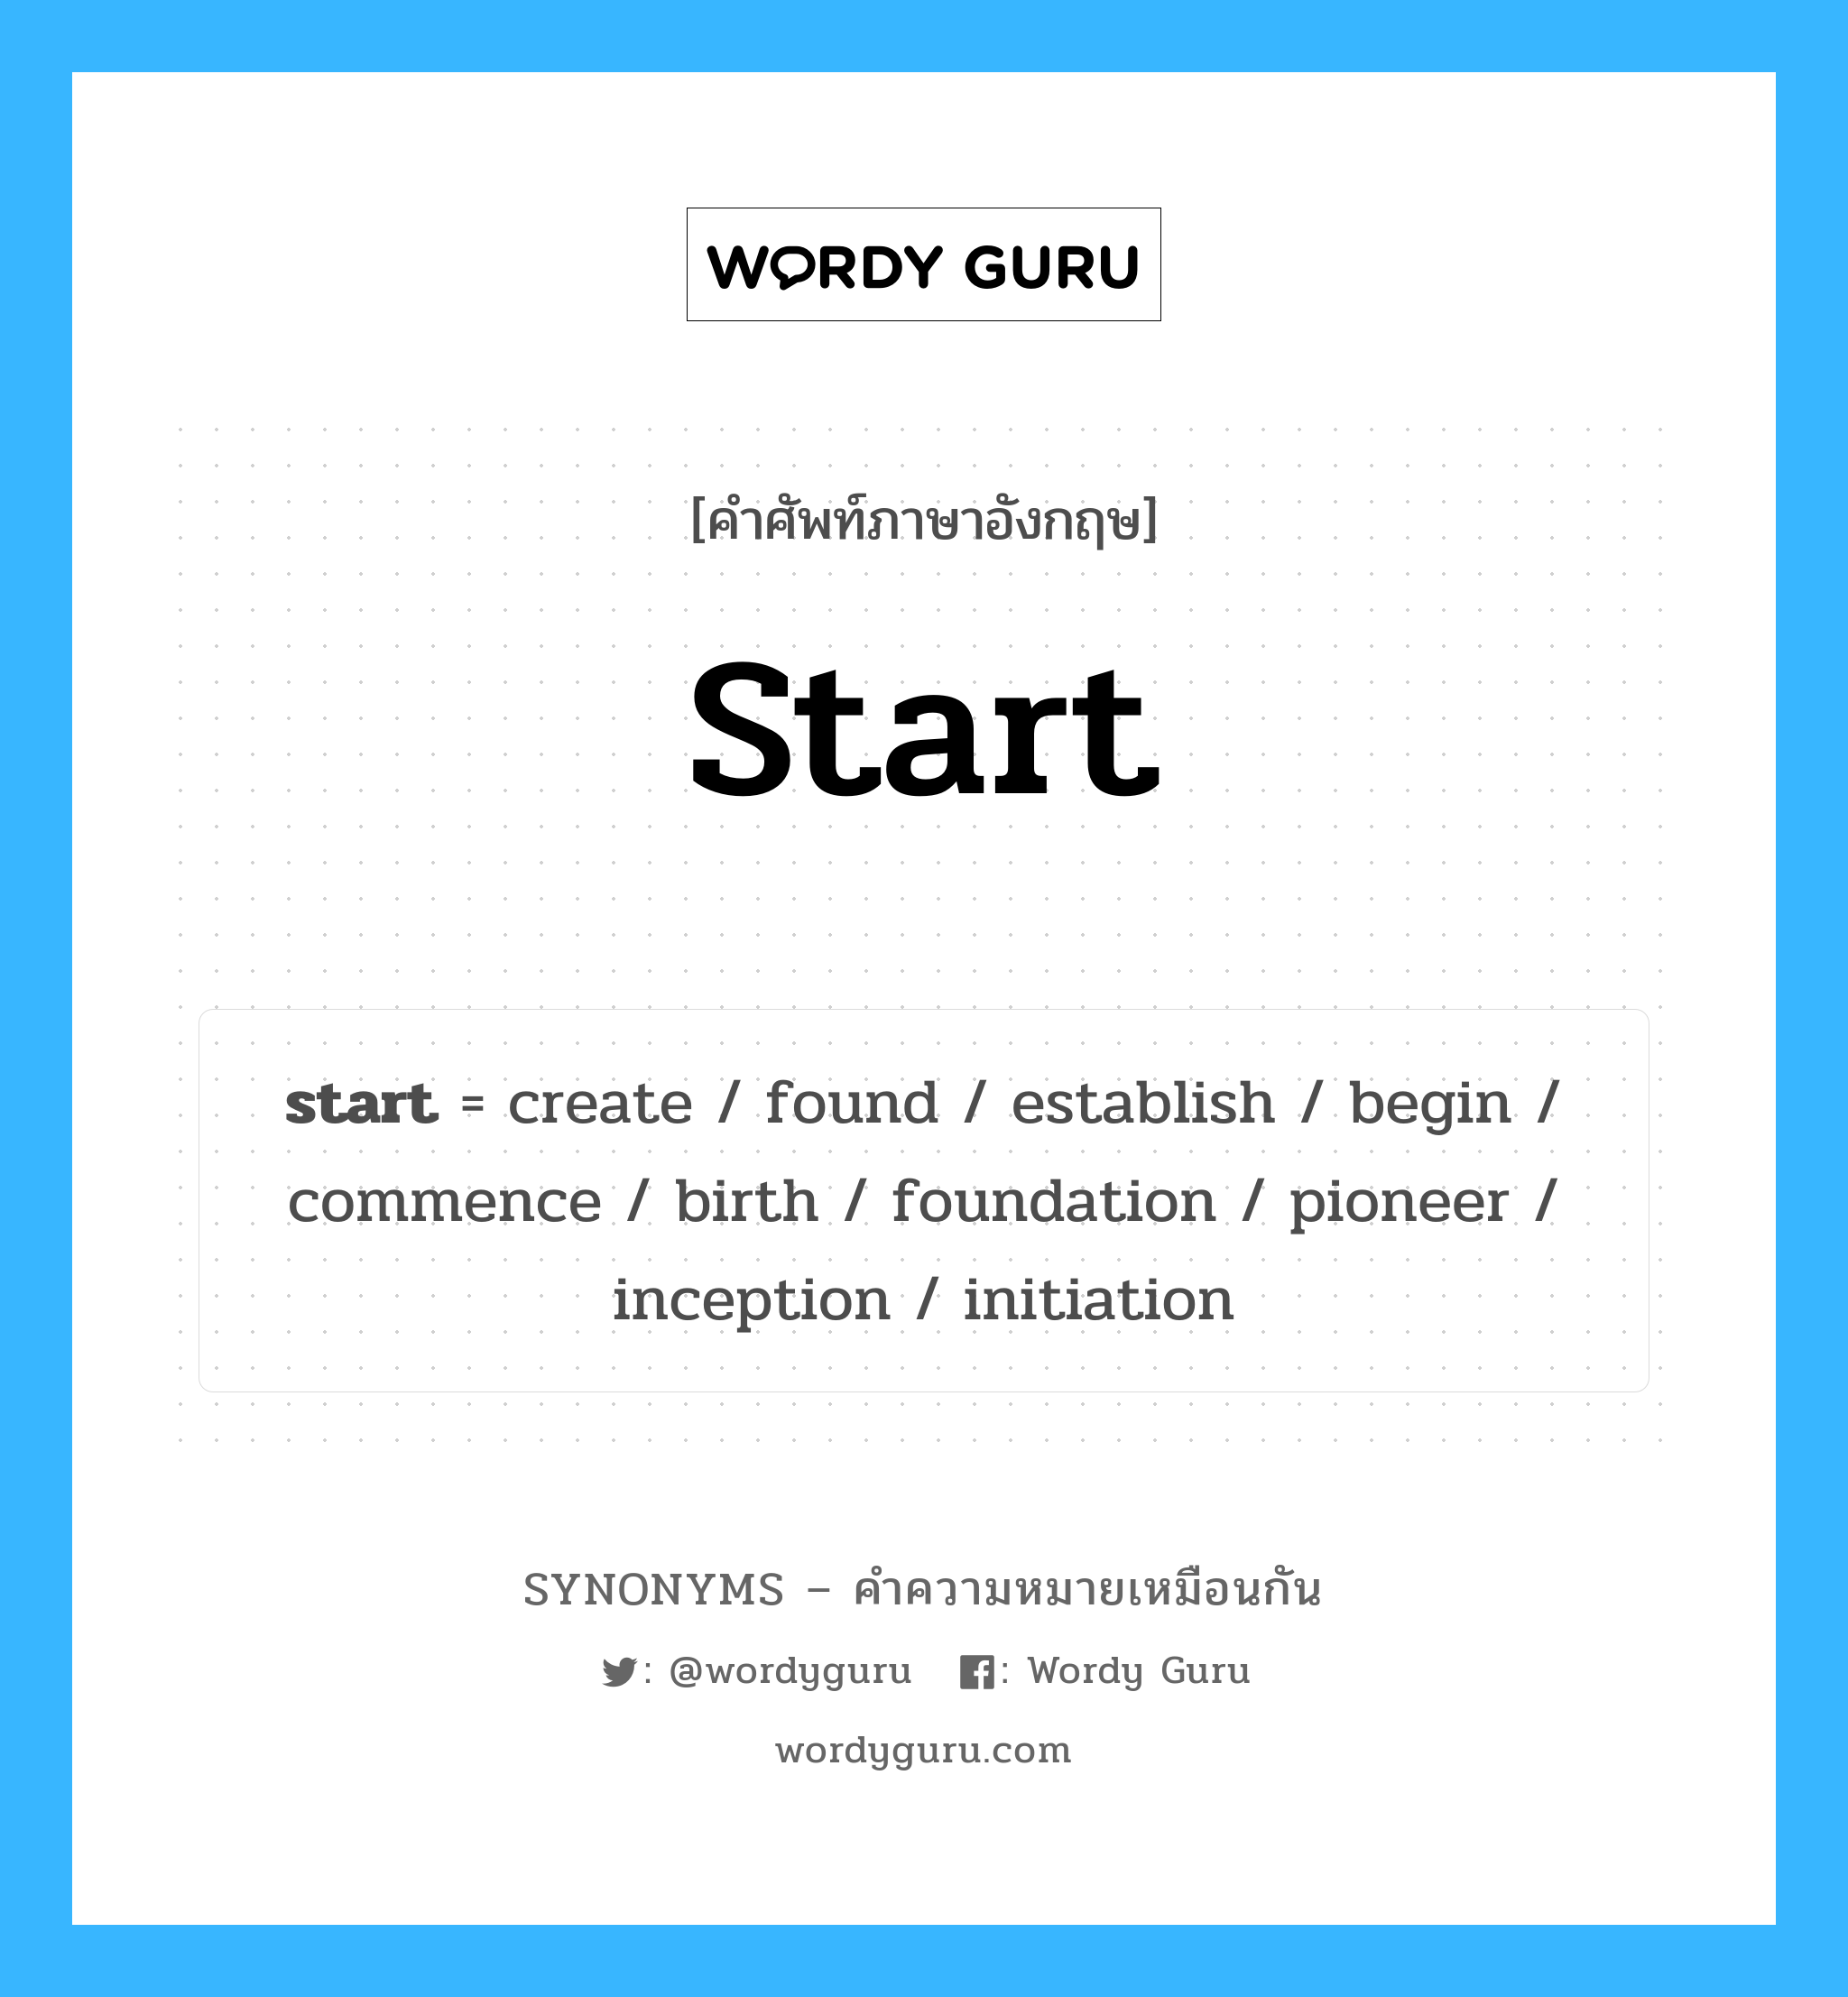 initiation เป็นหนึ่งใน start และมีคำอื่น ๆ อีกดังนี้, คำศัพท์ภาษาอังกฤษ initiation ความหมายคล้ายกันกับ start แปลว่า การเริ่มต้น หมวด start